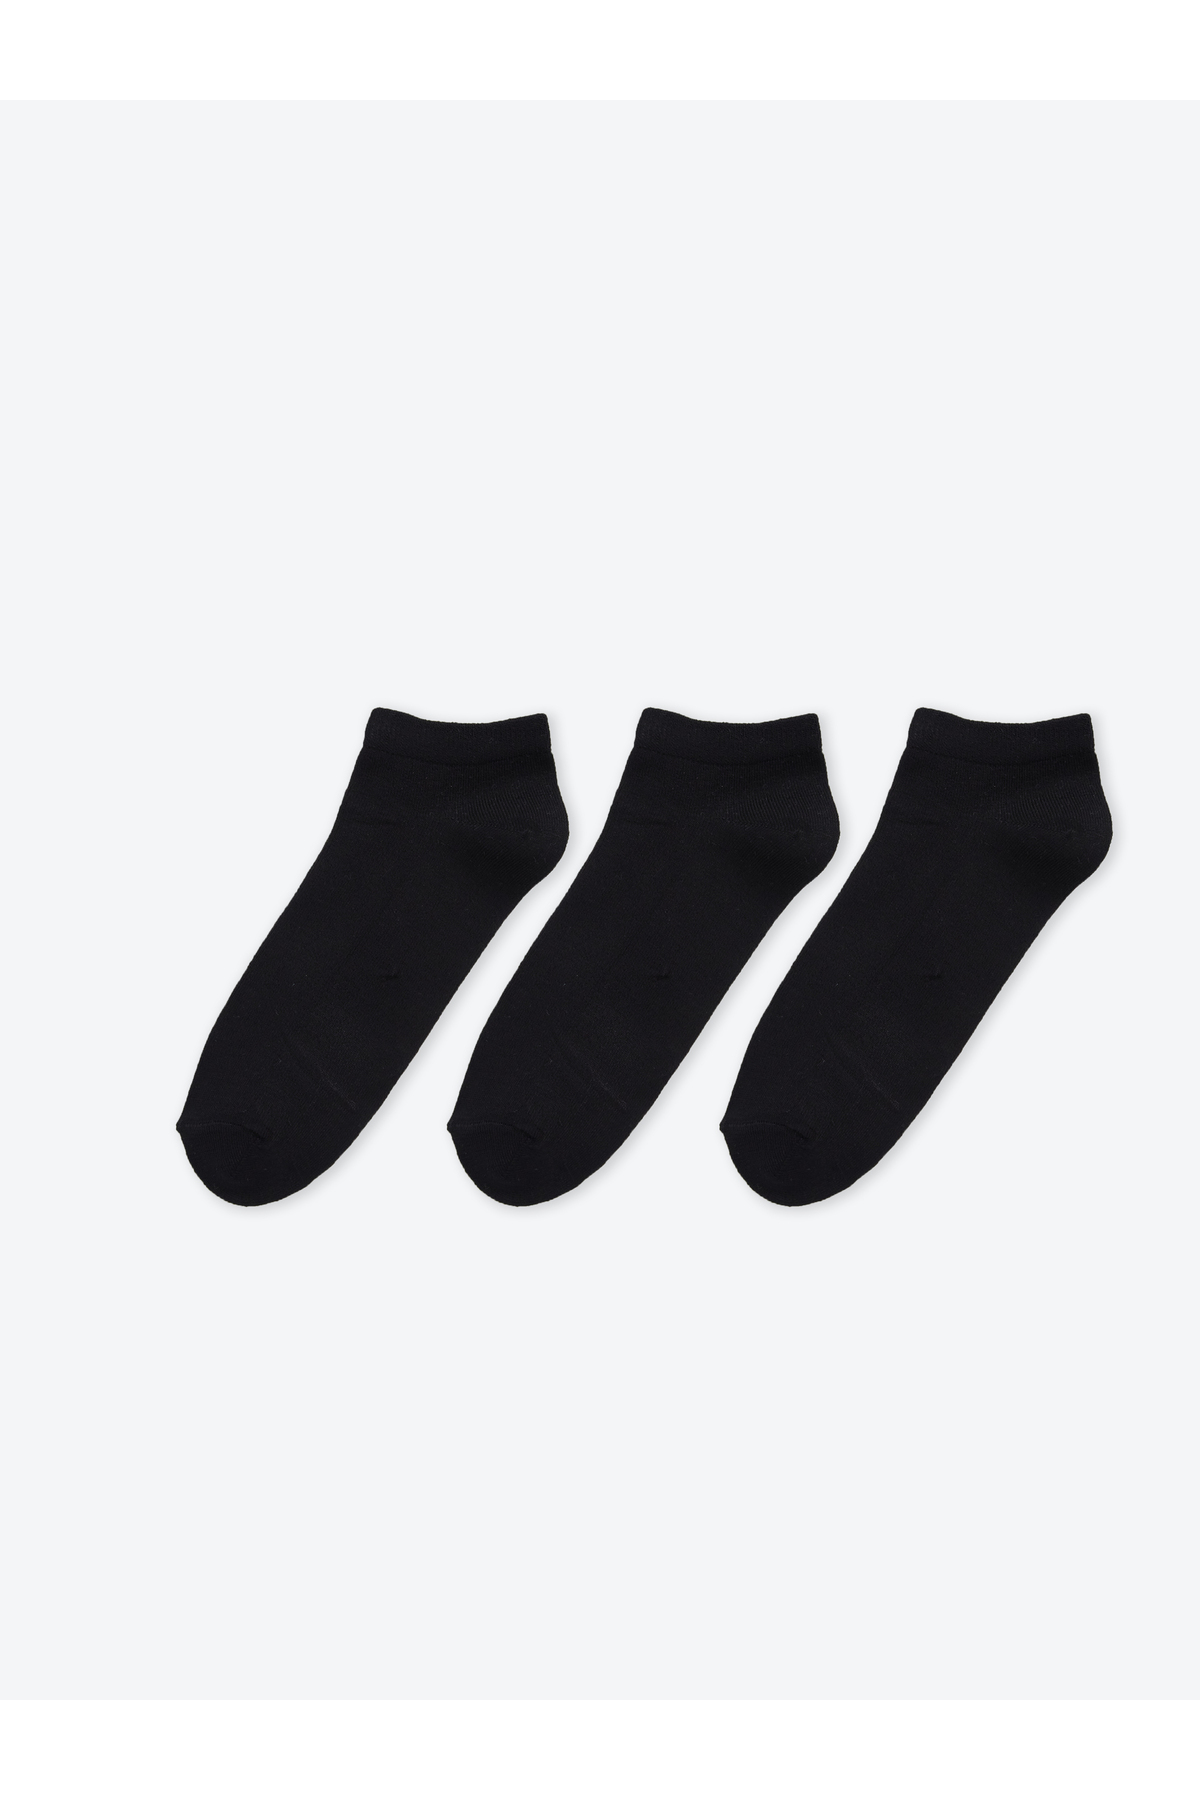 LC Waikiki Women's Plain Booties Socks 3-Pack